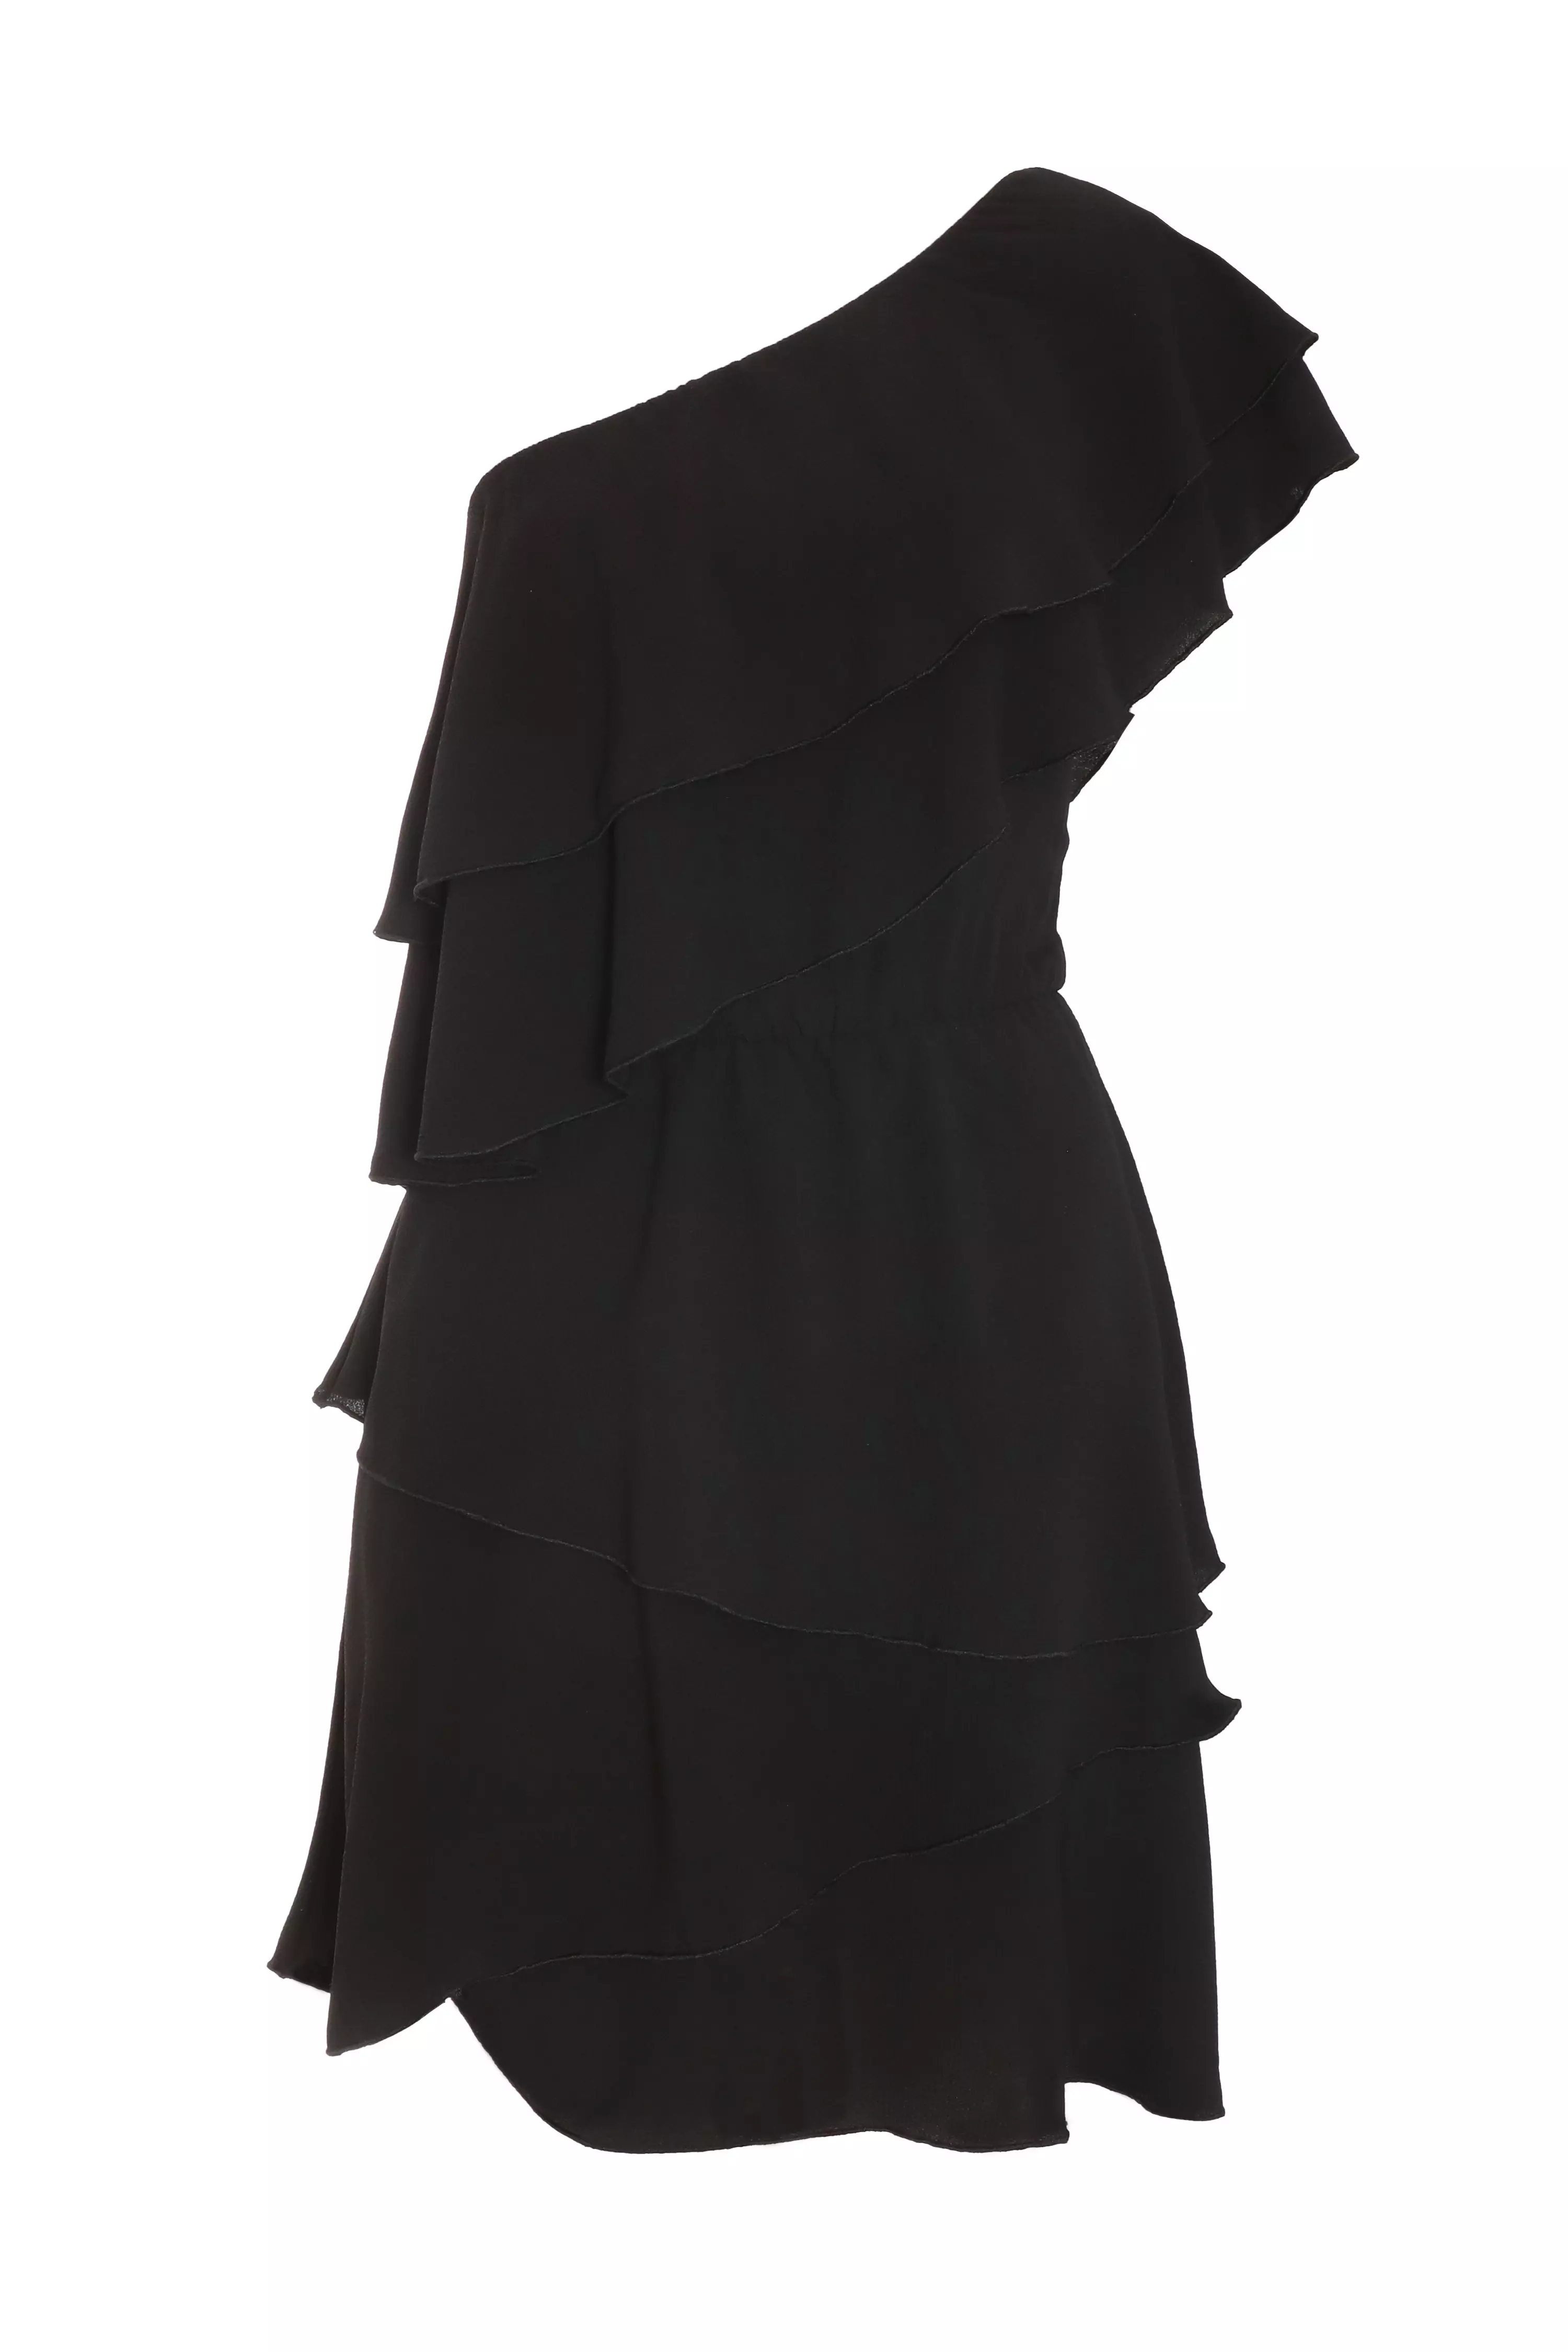 Black One Shoulder Tiered Mini Dress - QUIZ Clothing